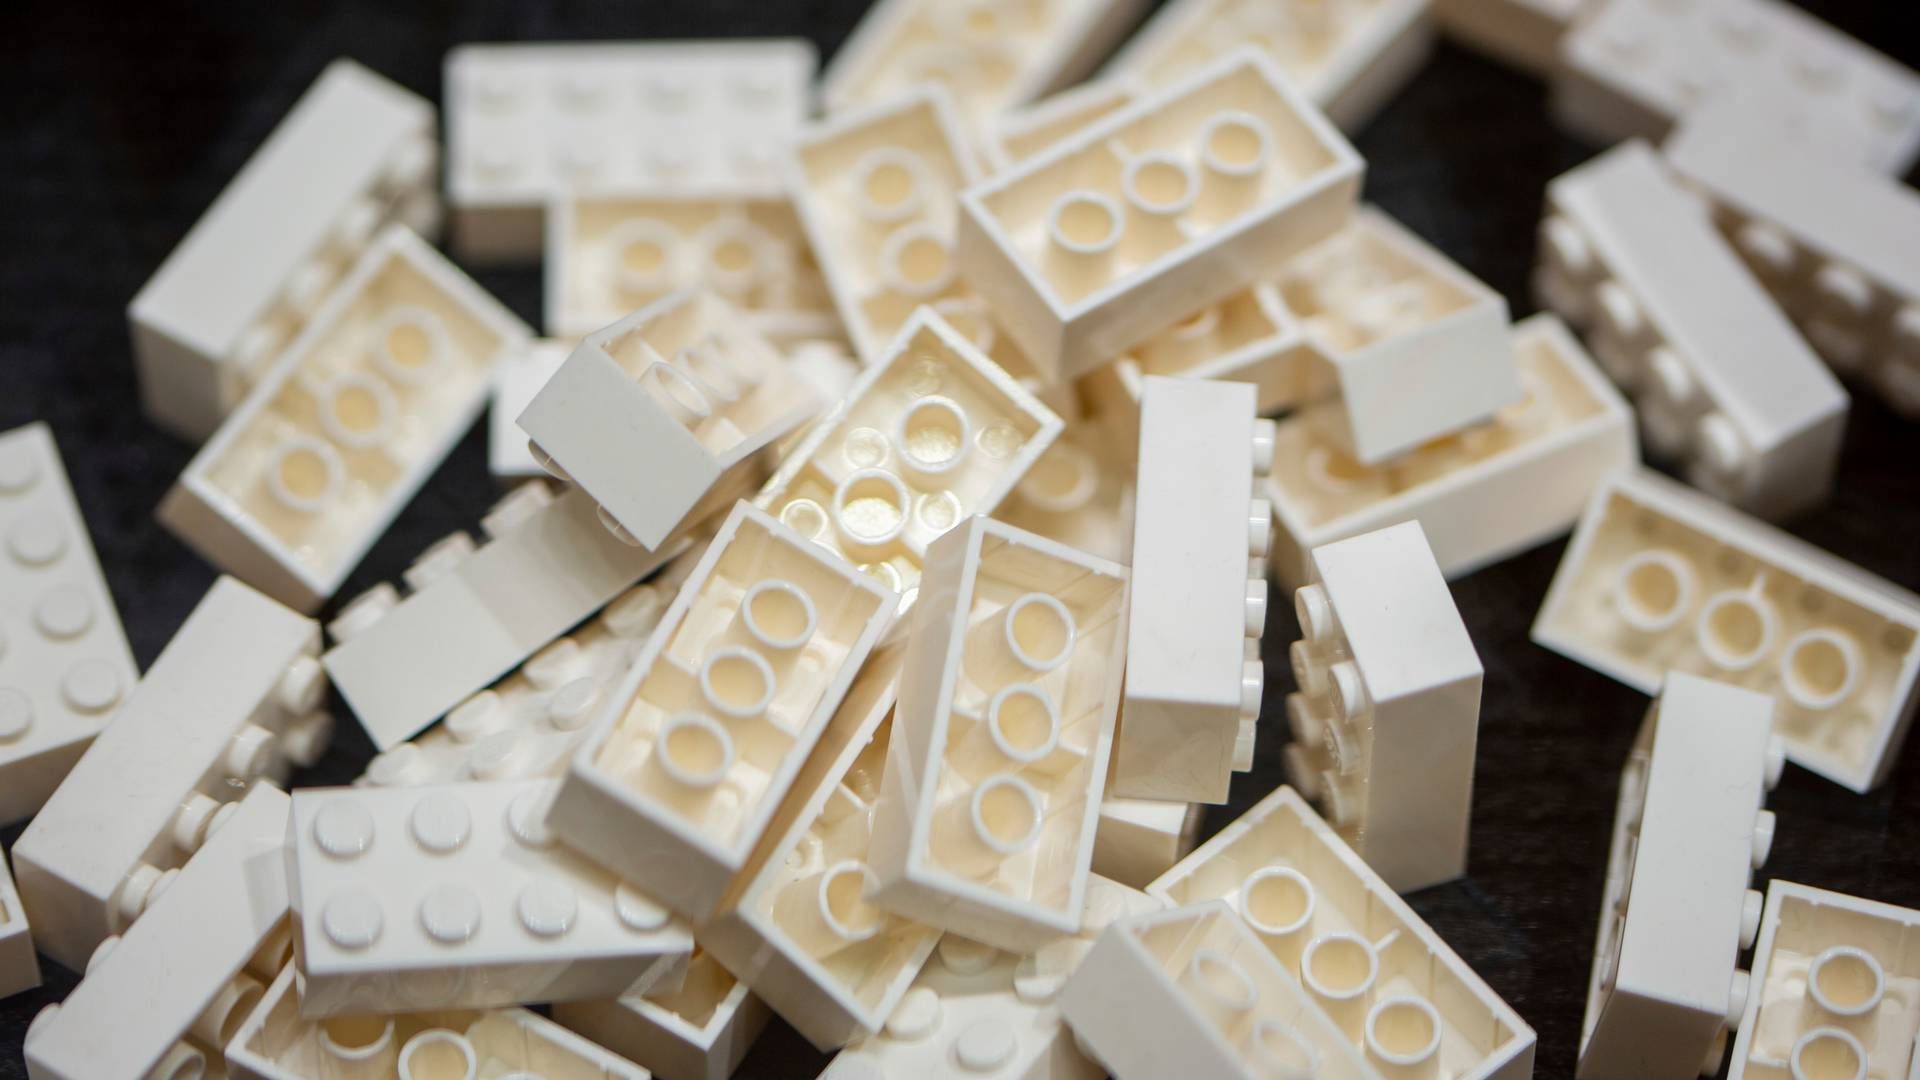 Billund-virksomheden Lego er, ifølge bureauet Mindshares, analyse Danmarks stærkeste brand. | Foto: Fernando Gutierrez-Juarez/AP/Ritzau Scanpix